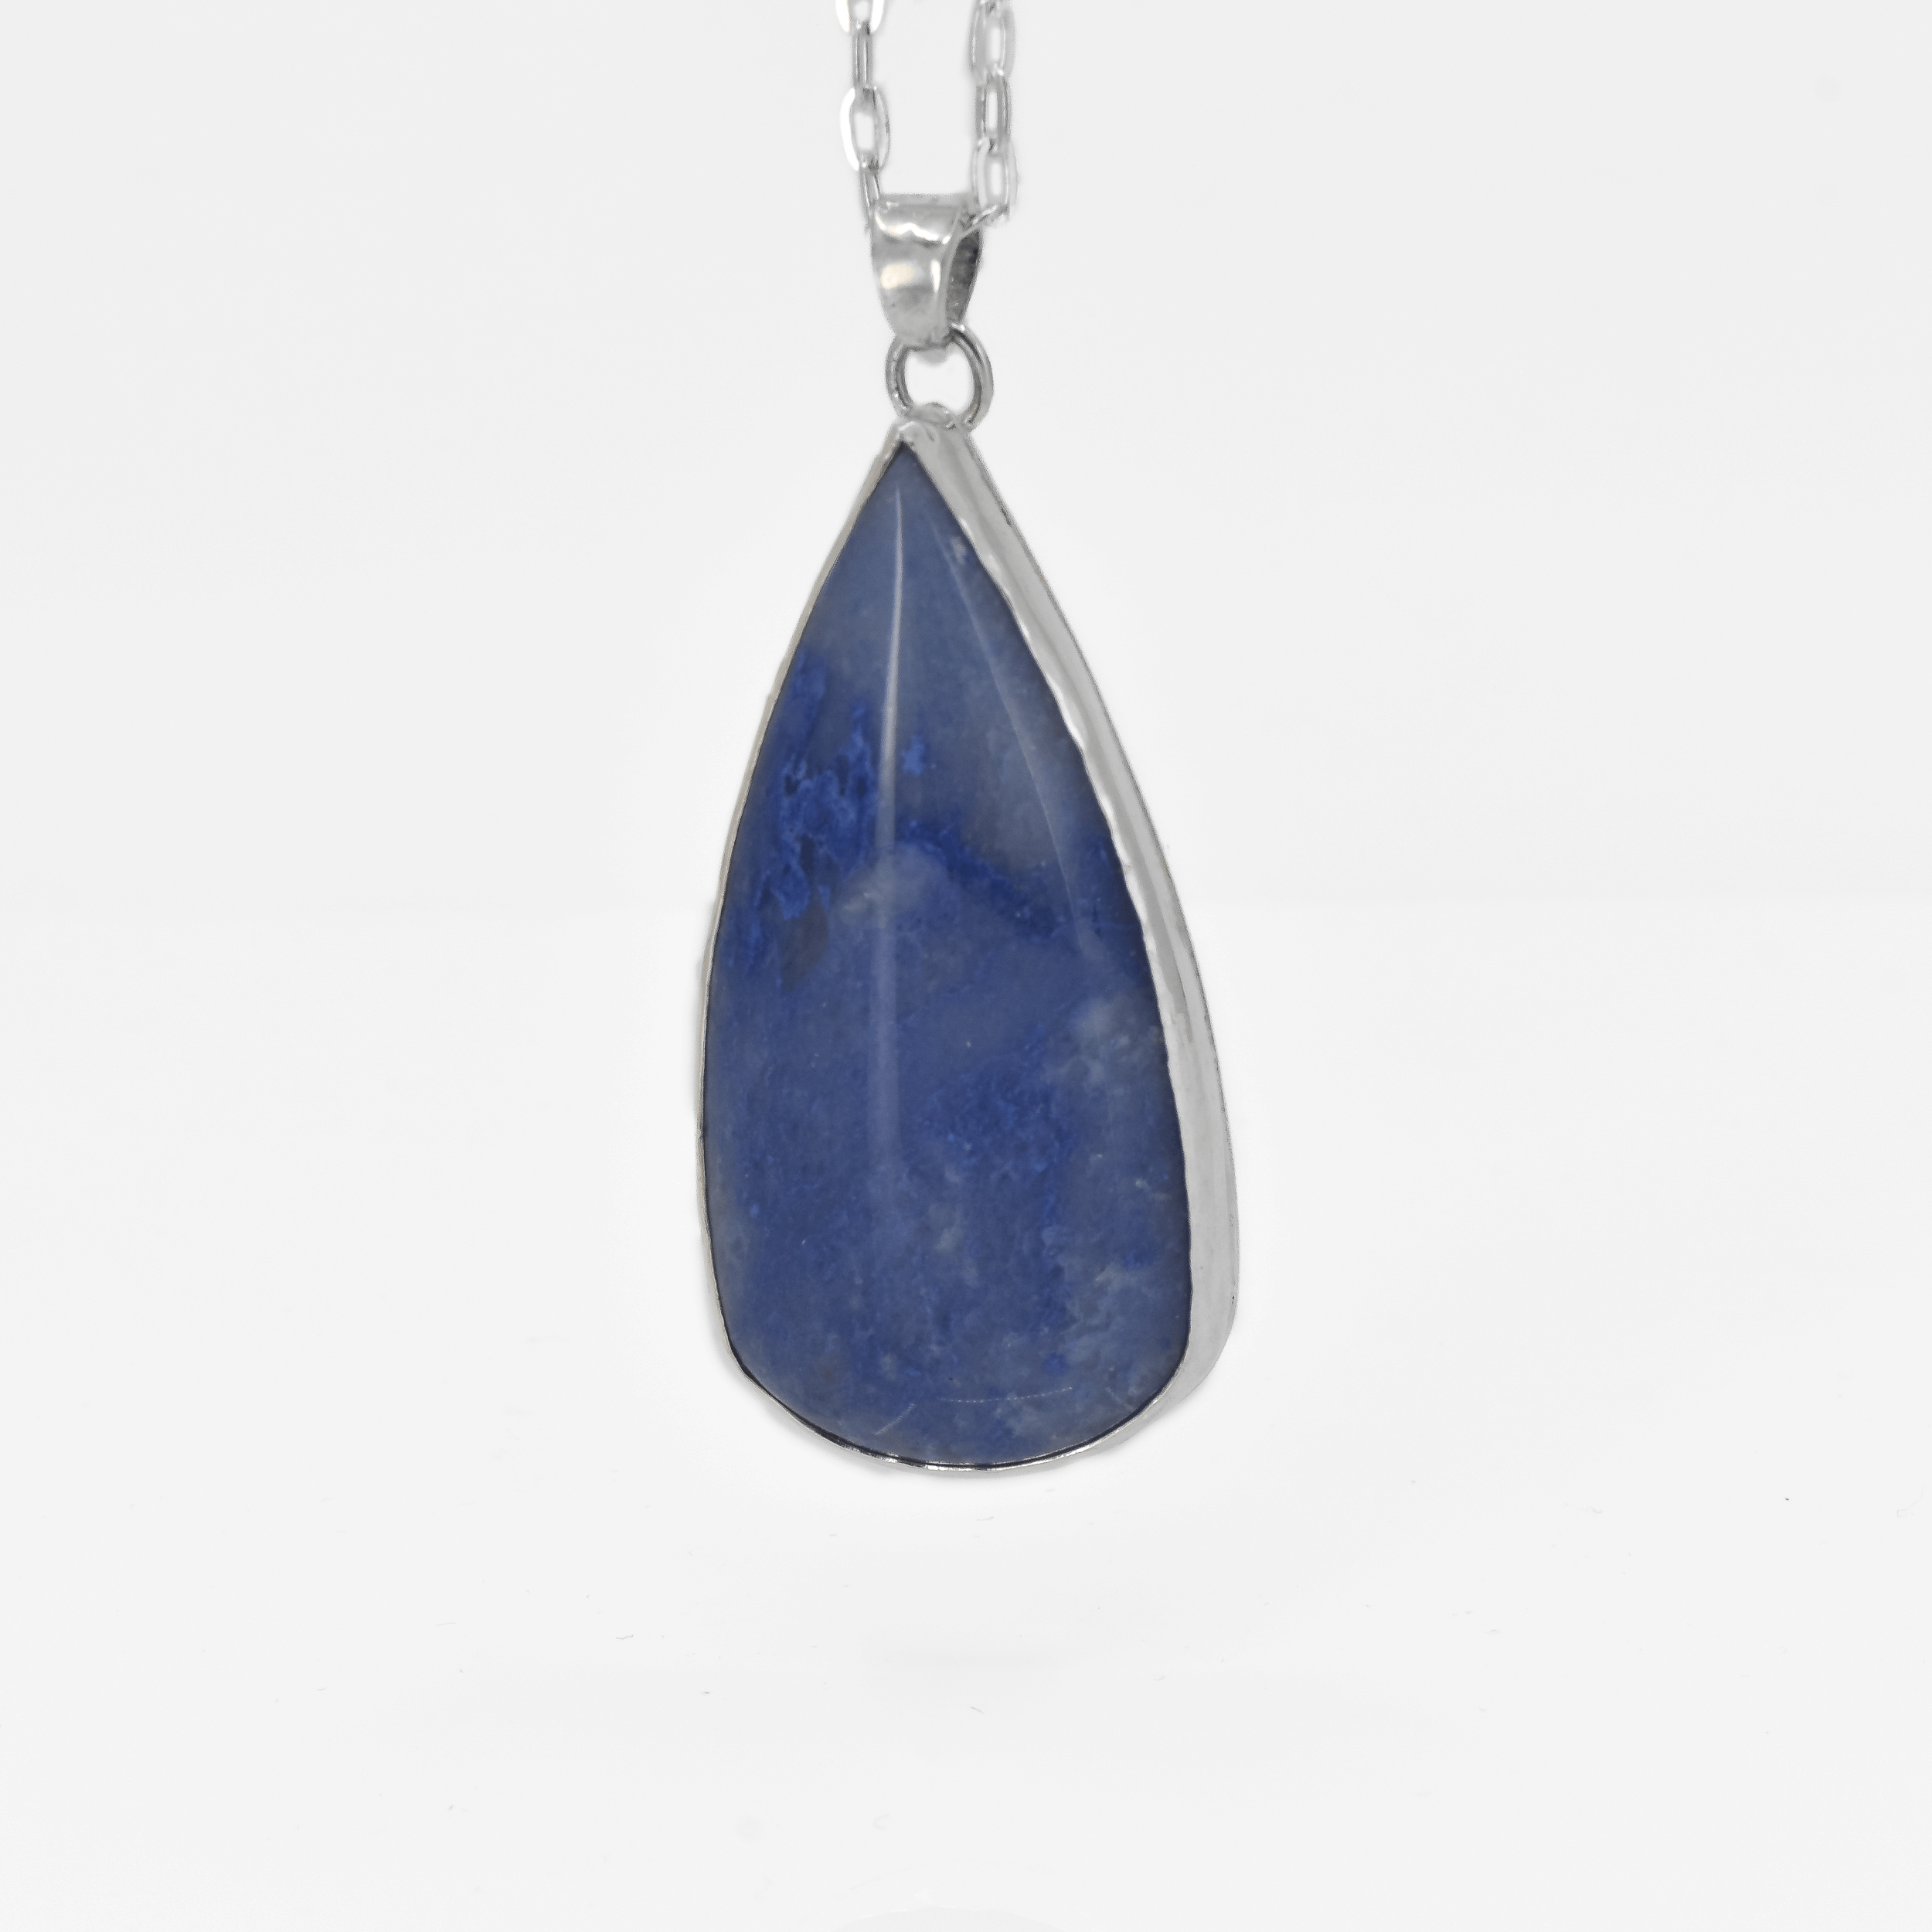 Blue aventurine statement necklace in a teardrop shape